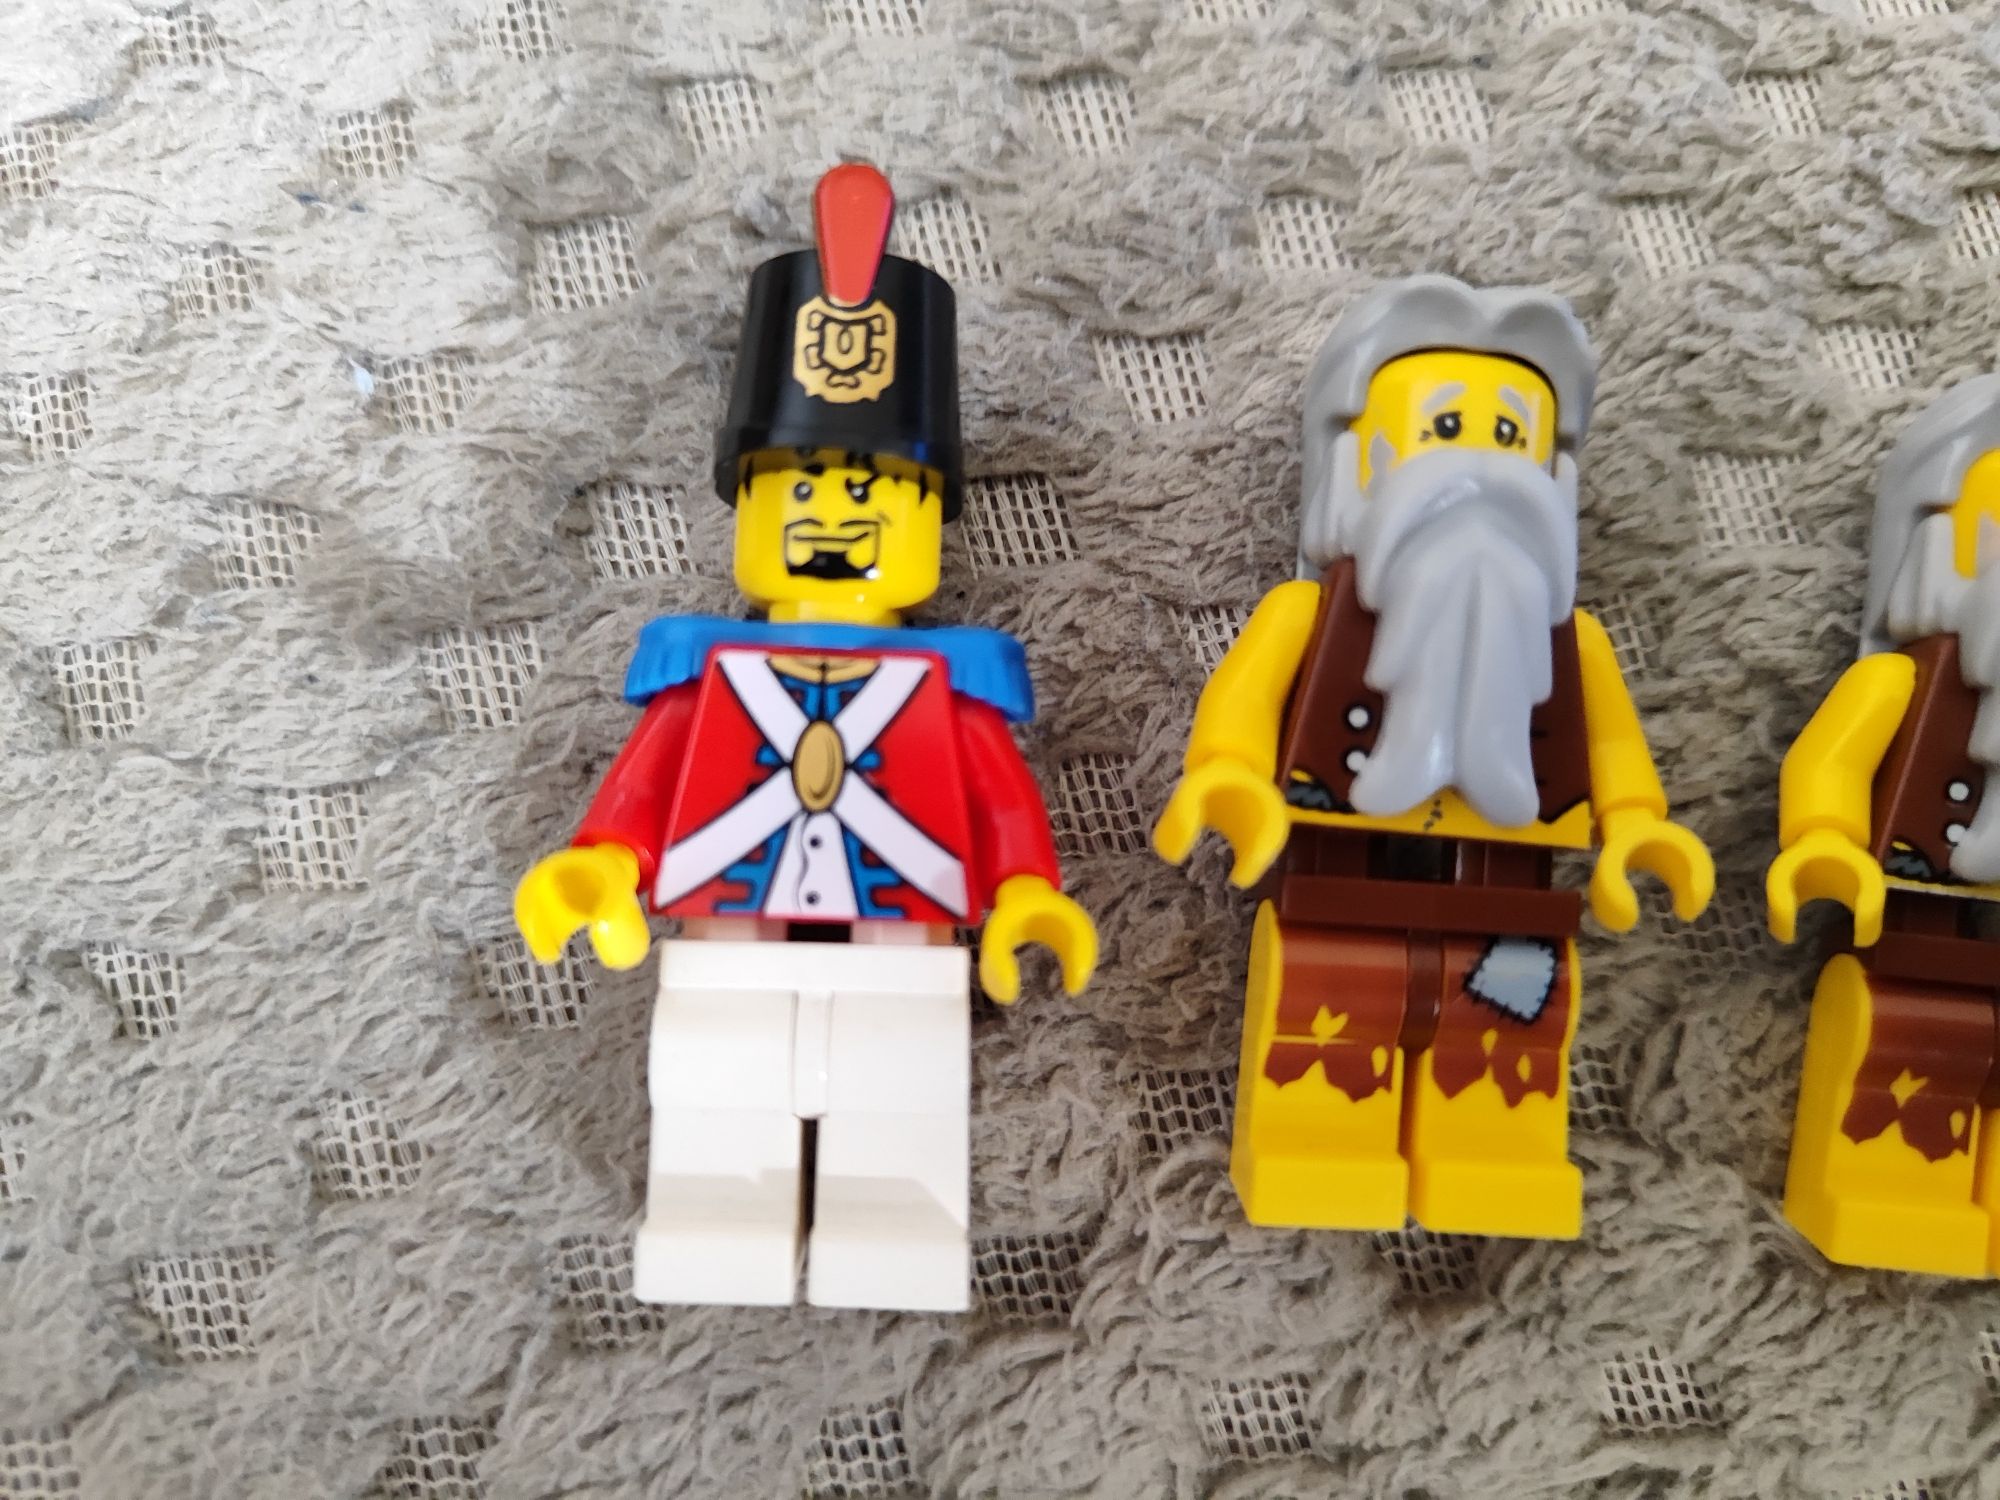 Lego Pirates минифигури